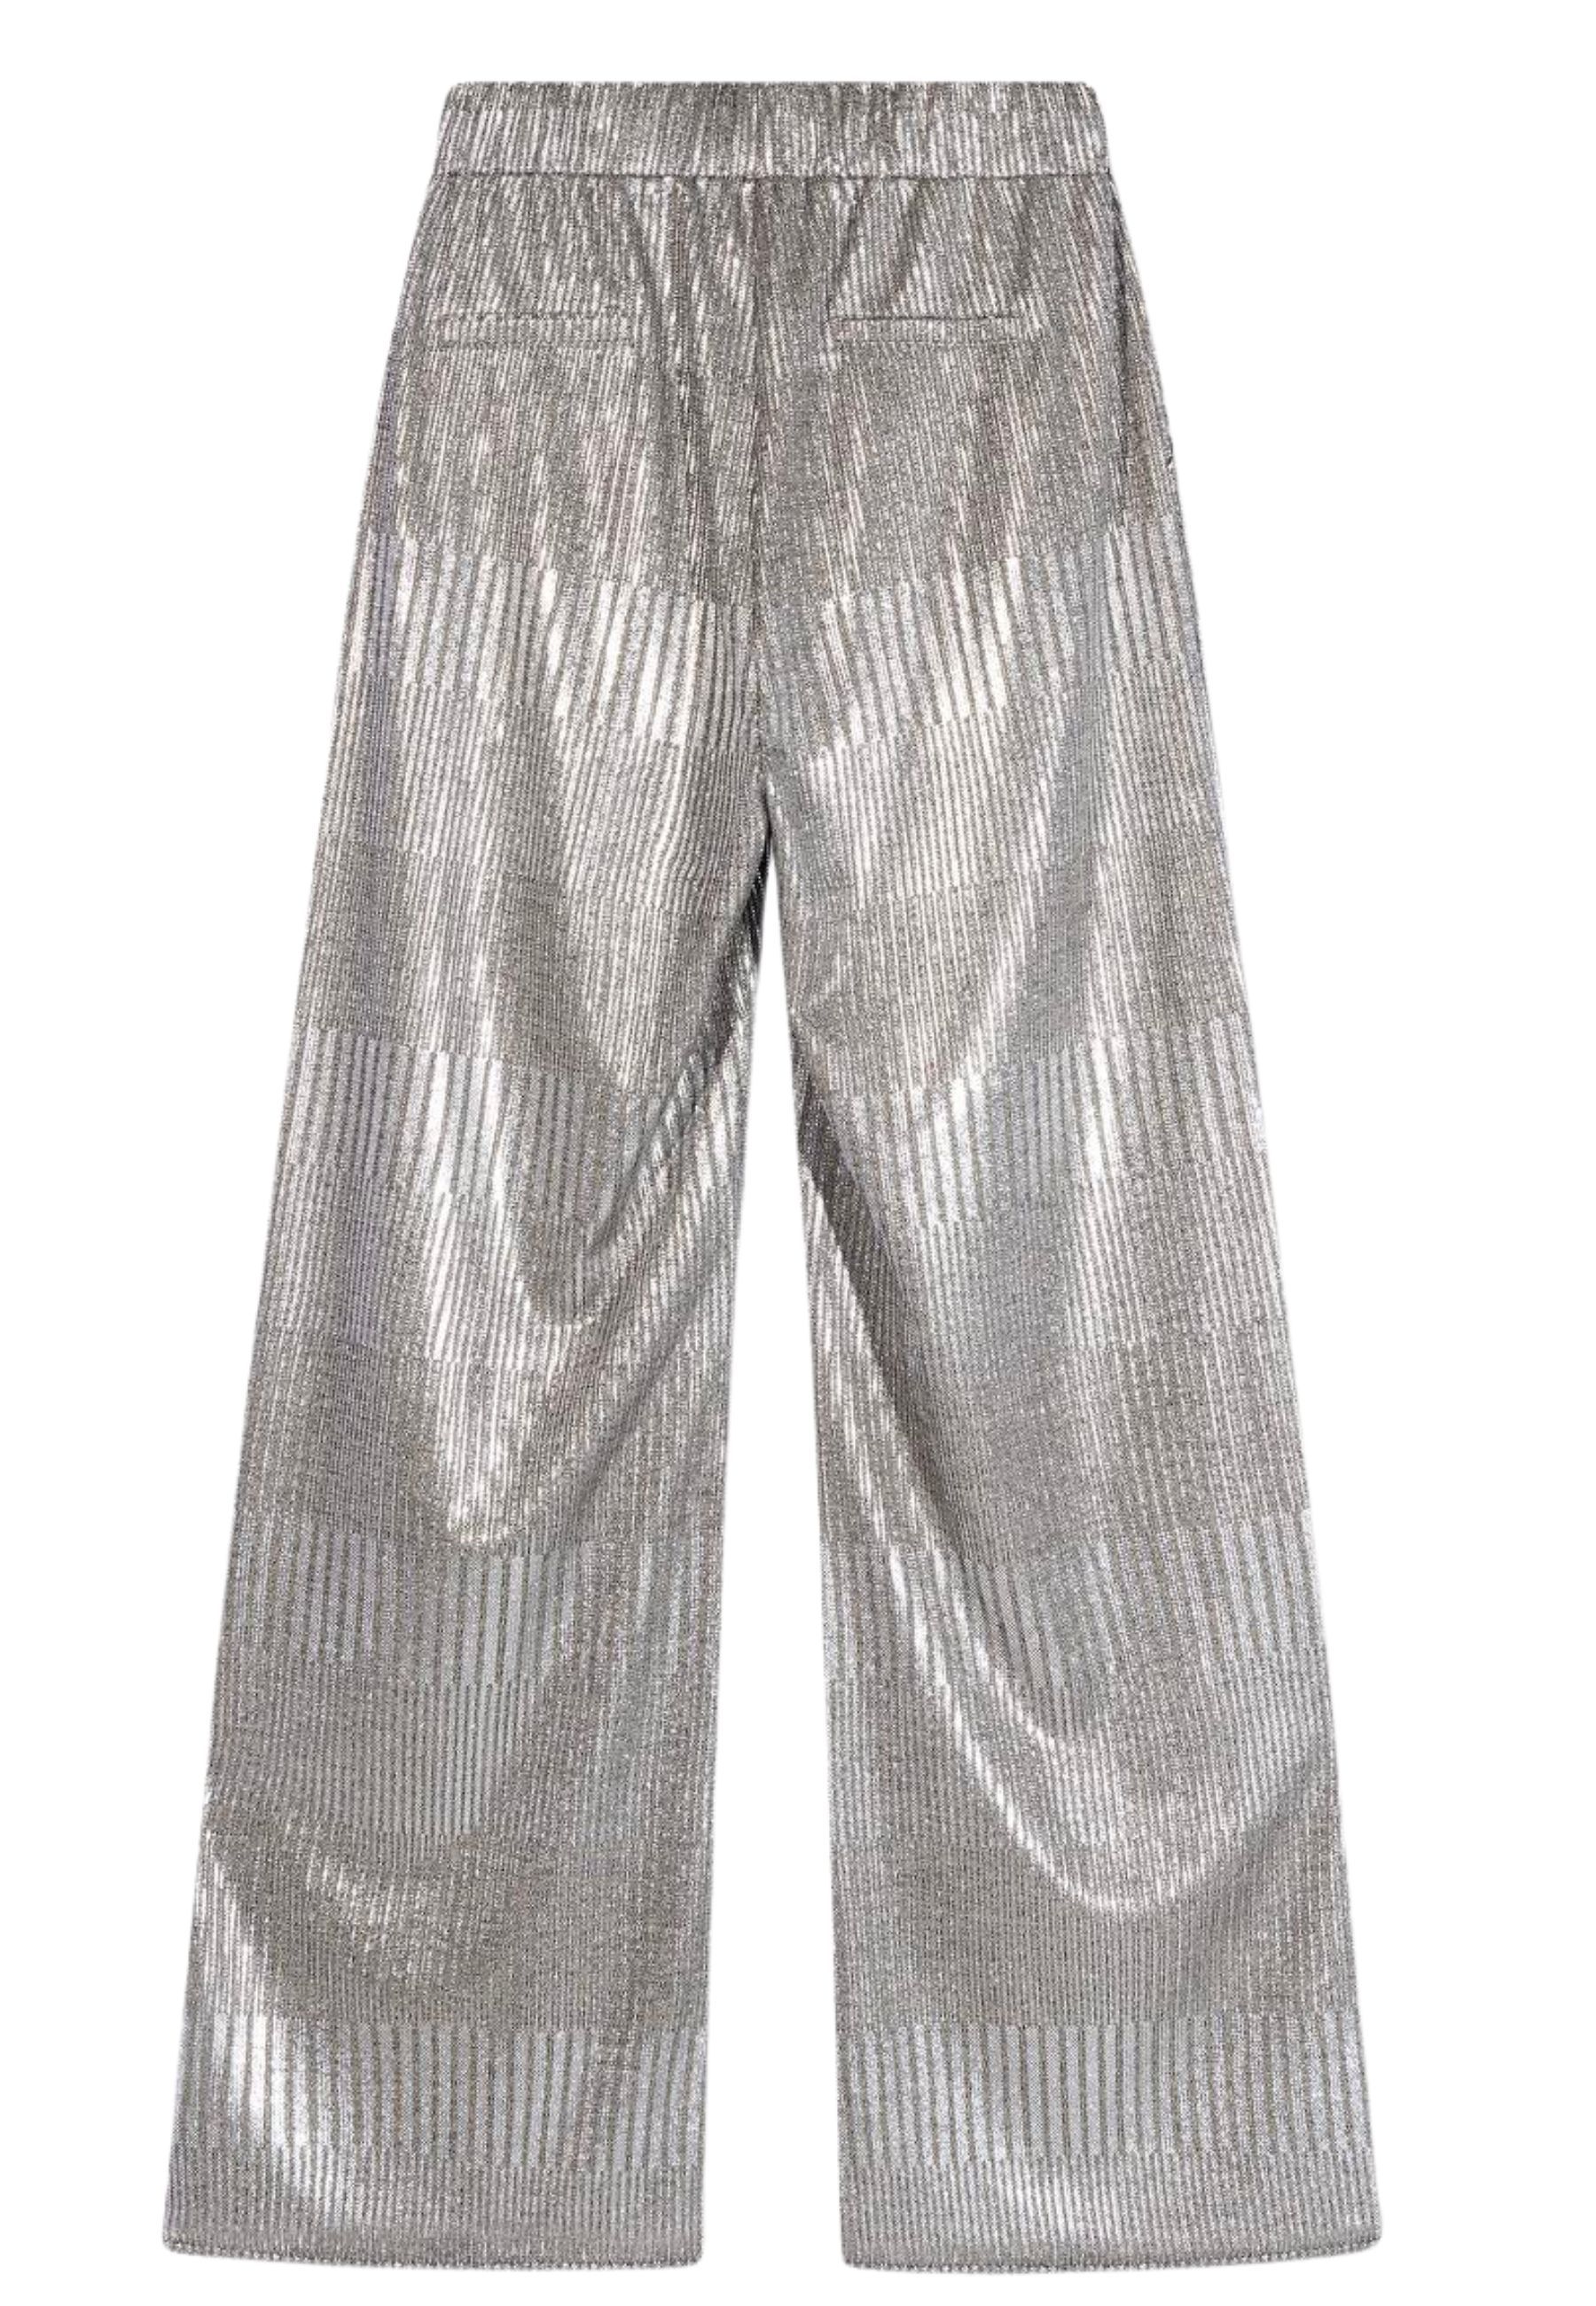 Wide leg pantalons zilver